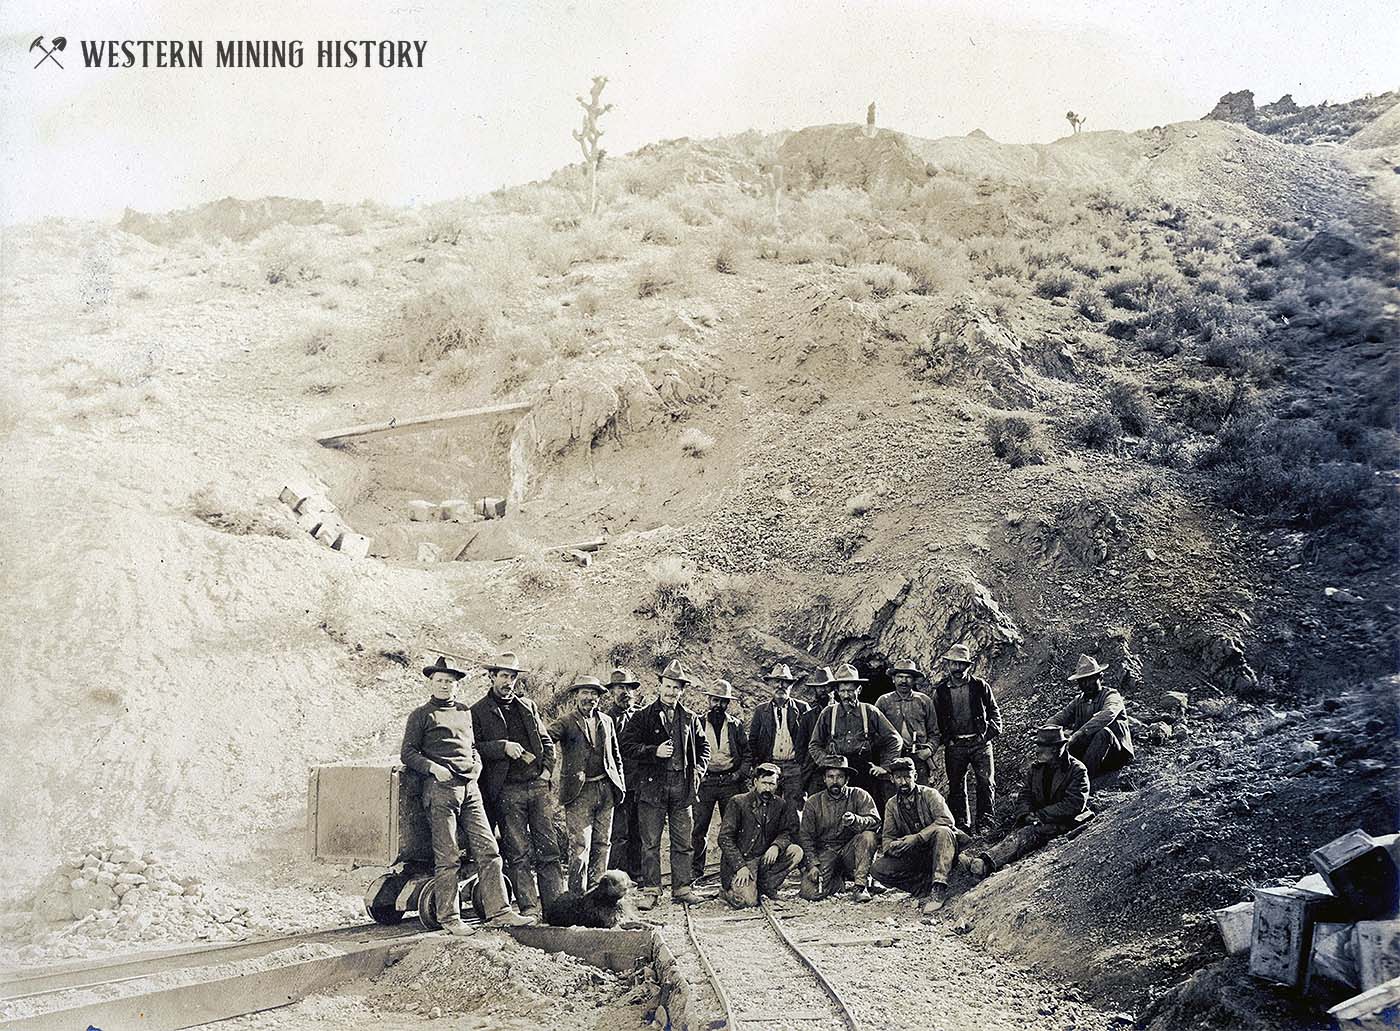 Miners at the Keystone mine - Goodsprings, Nevada 1910